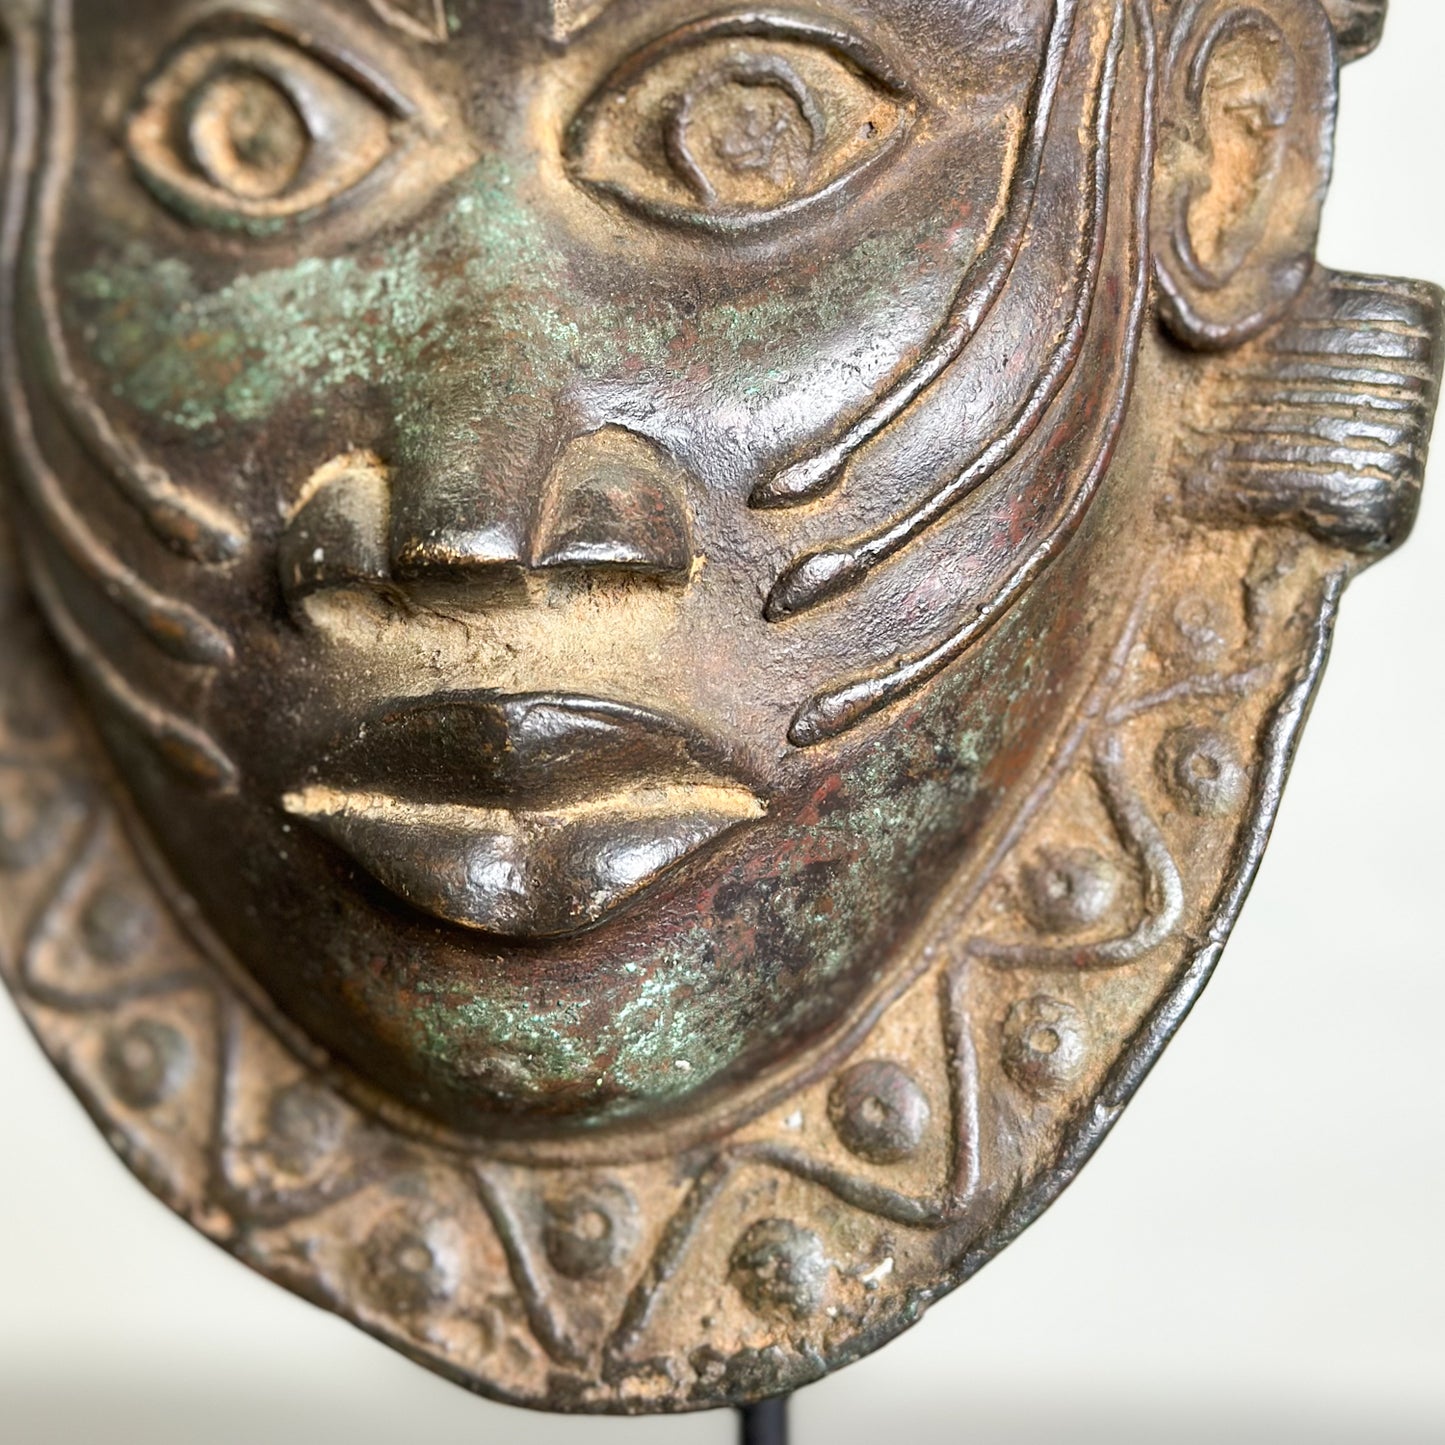 Bronze Mask - Benin